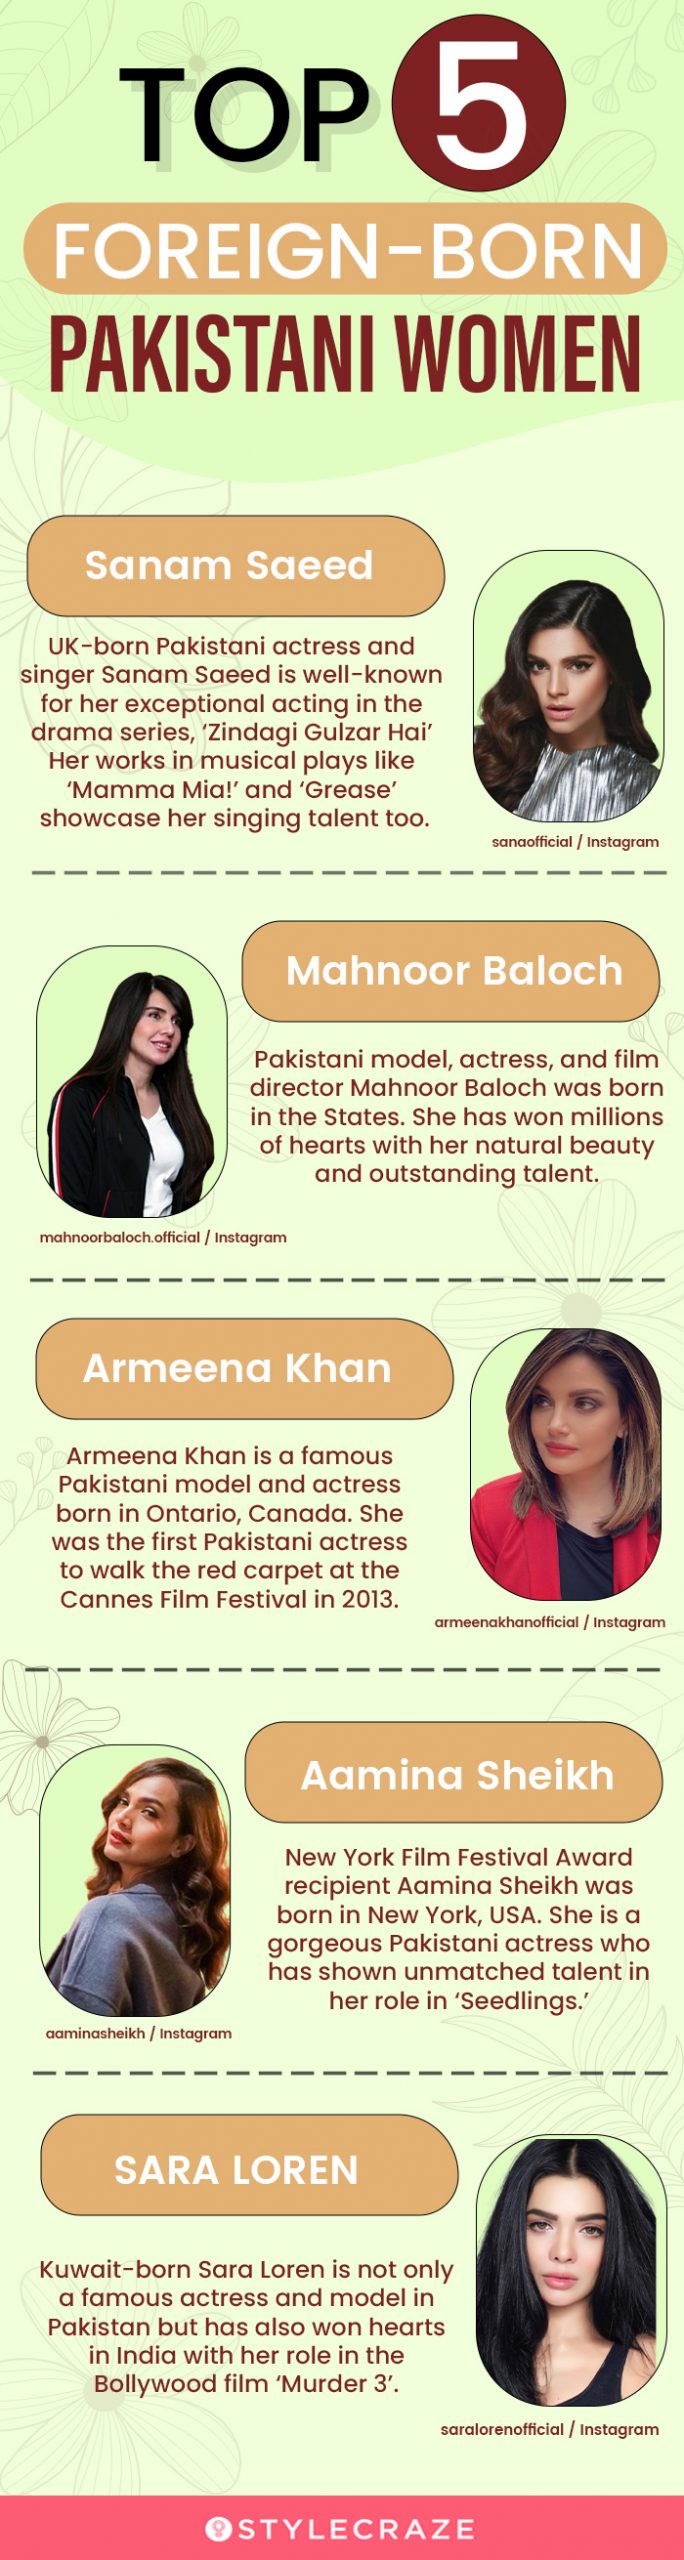 top 5 foreign born pakistani women [infographic]